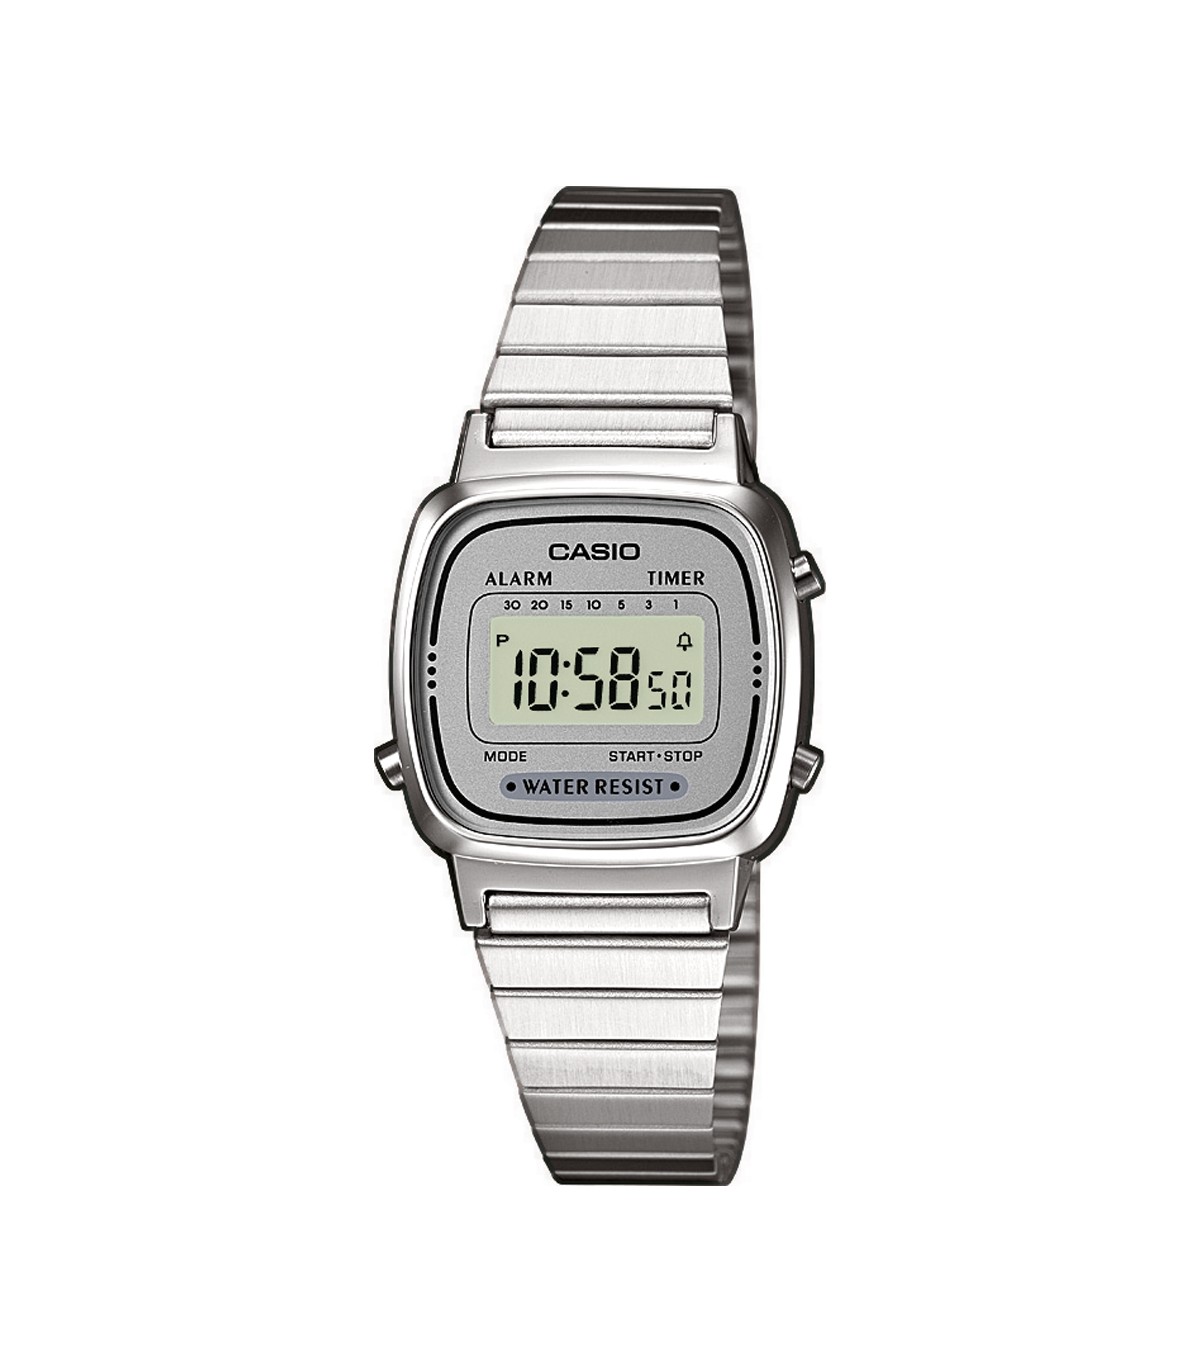 Reloj digital clásico mujer Casio LA670WA-7 plateado resistente al agua